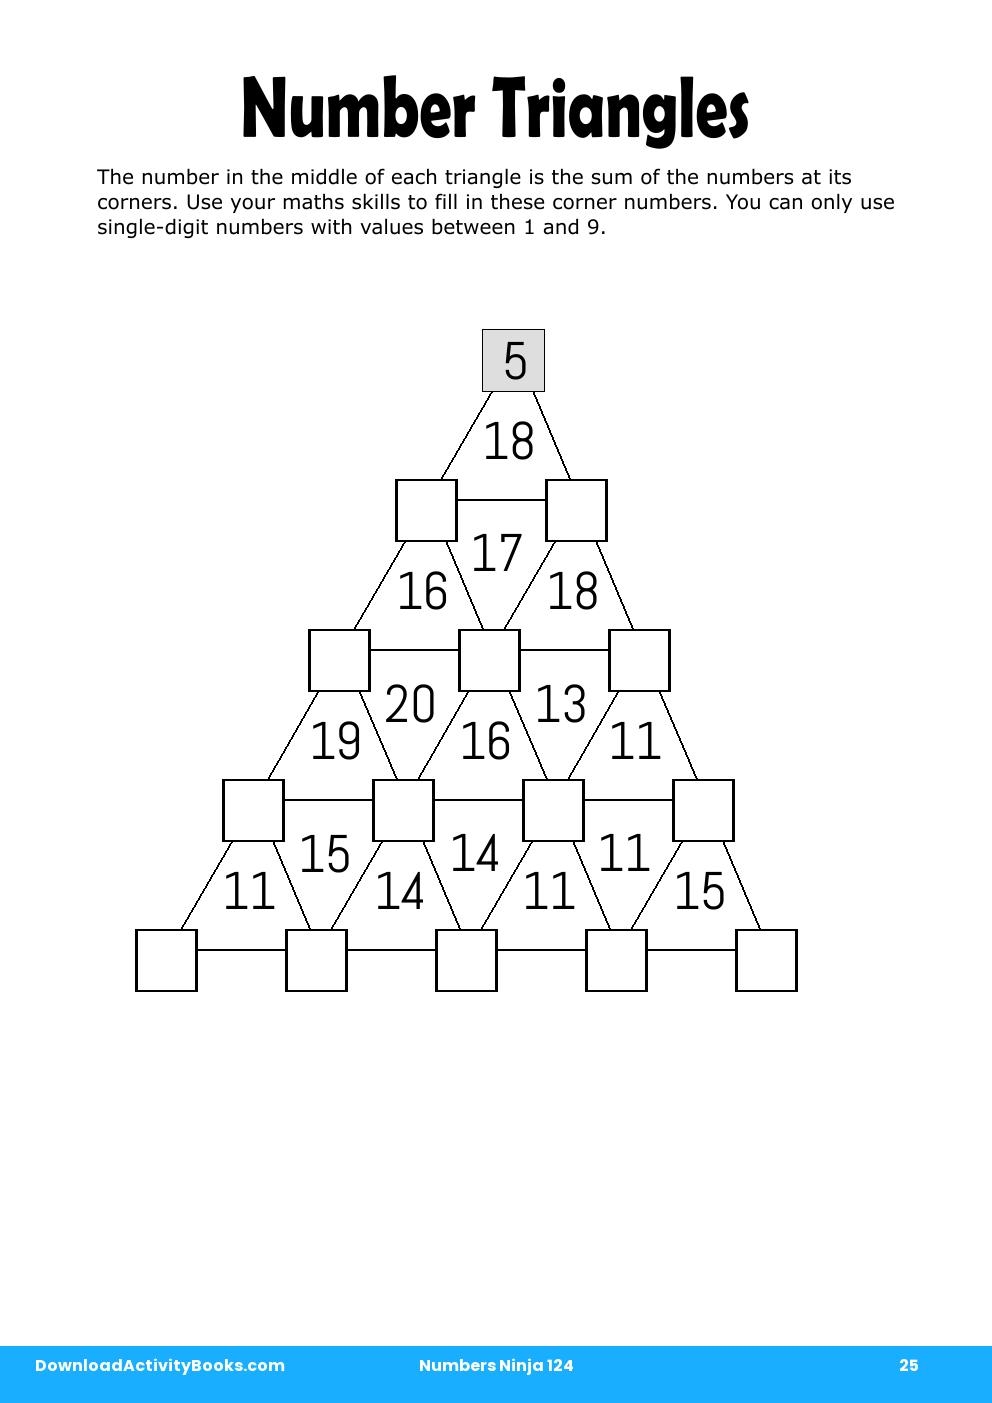 Number Triangles in Numbers Ninja 124